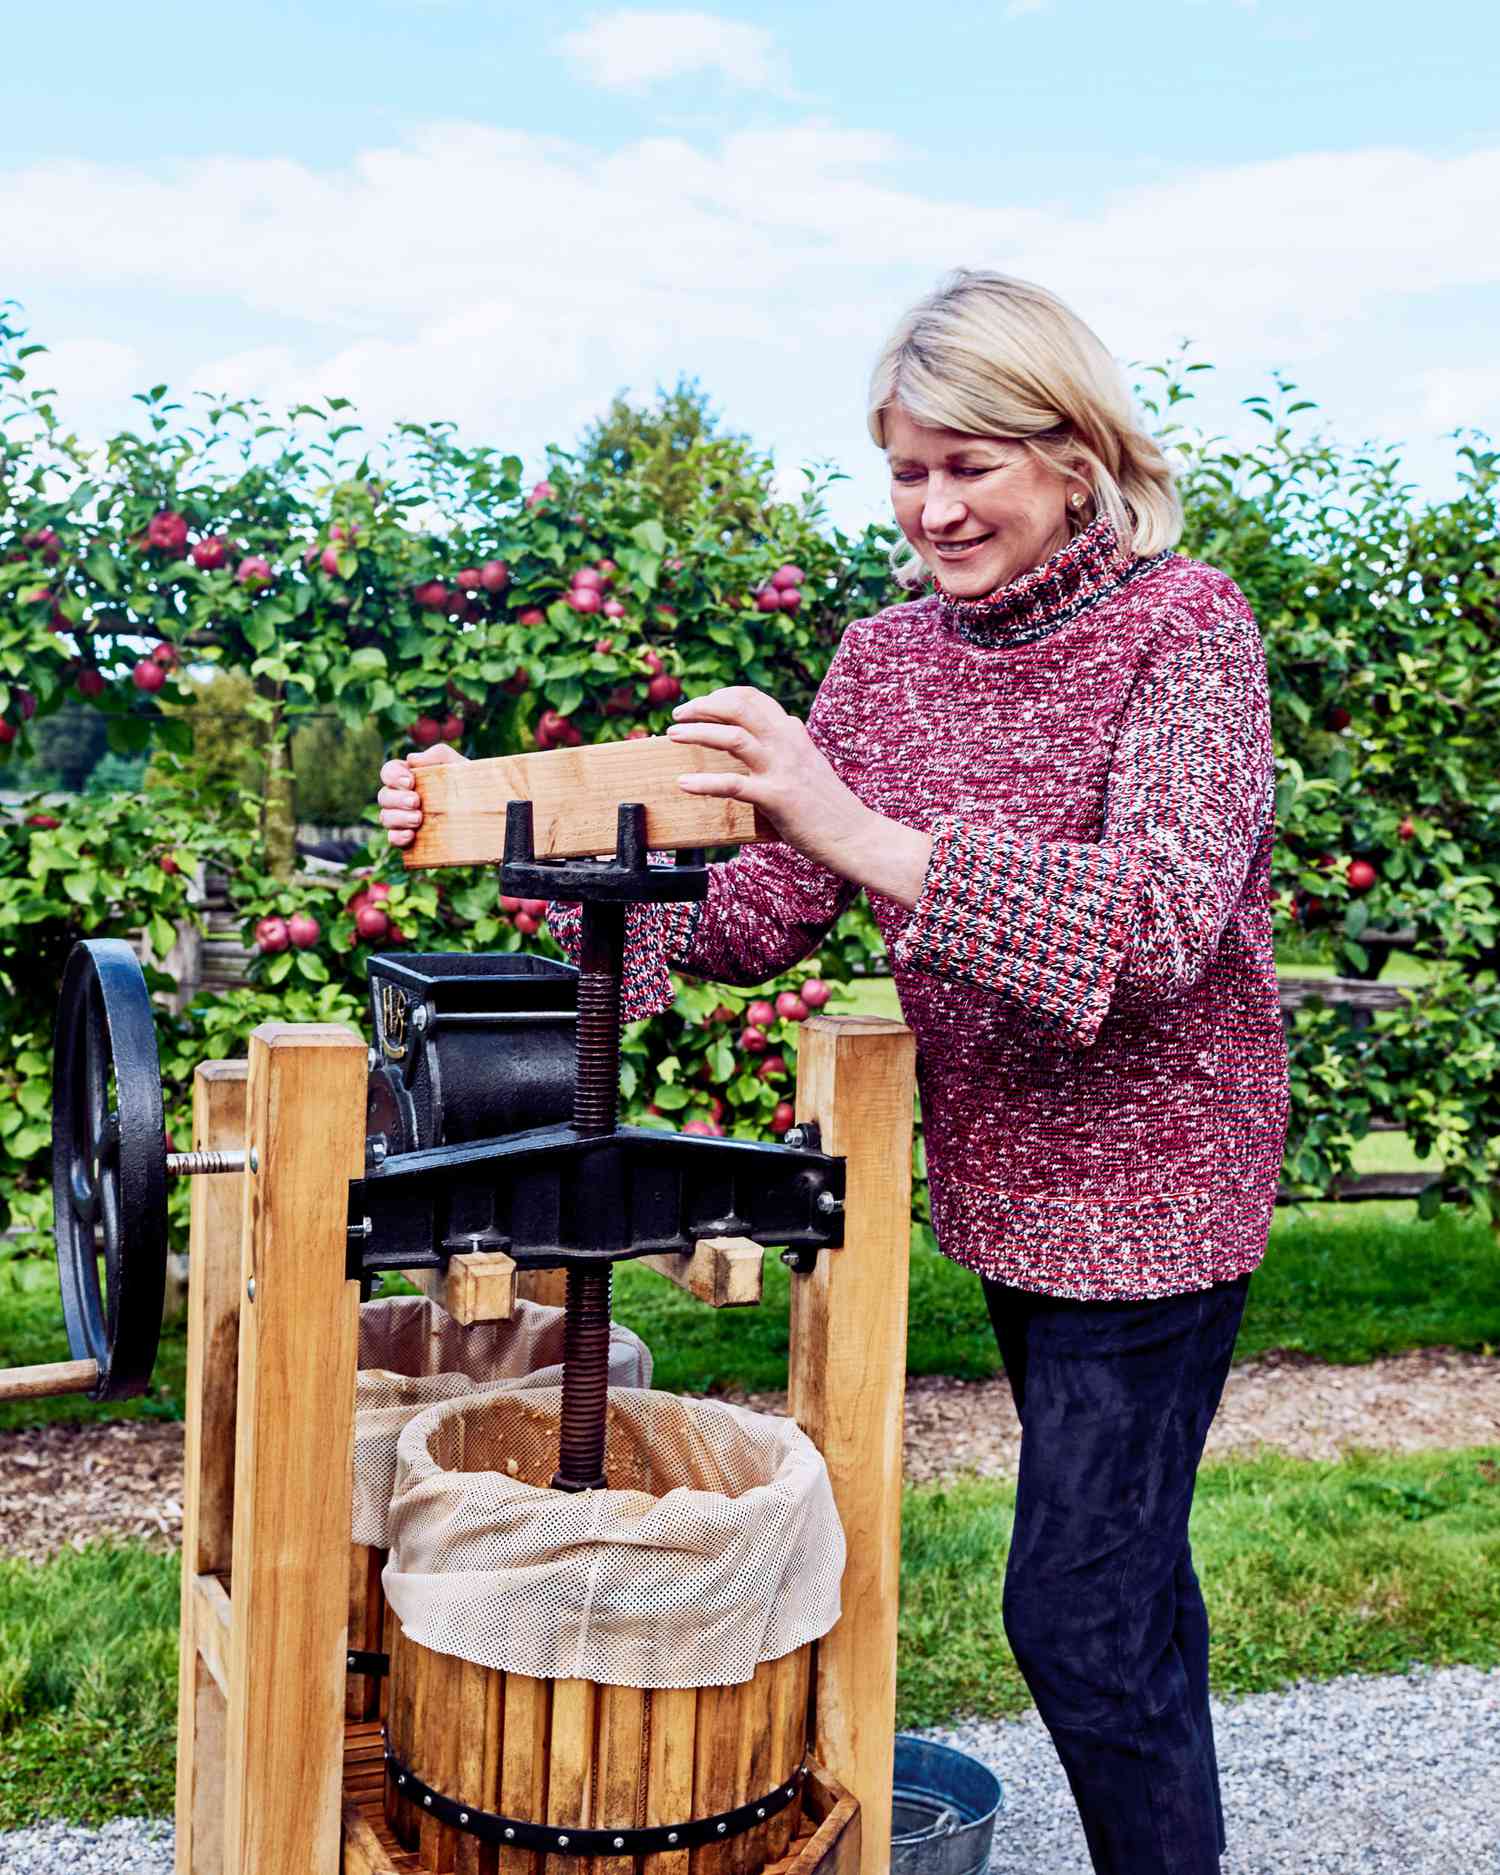 Martha Sewart pressing apples into a barrel for apple cider